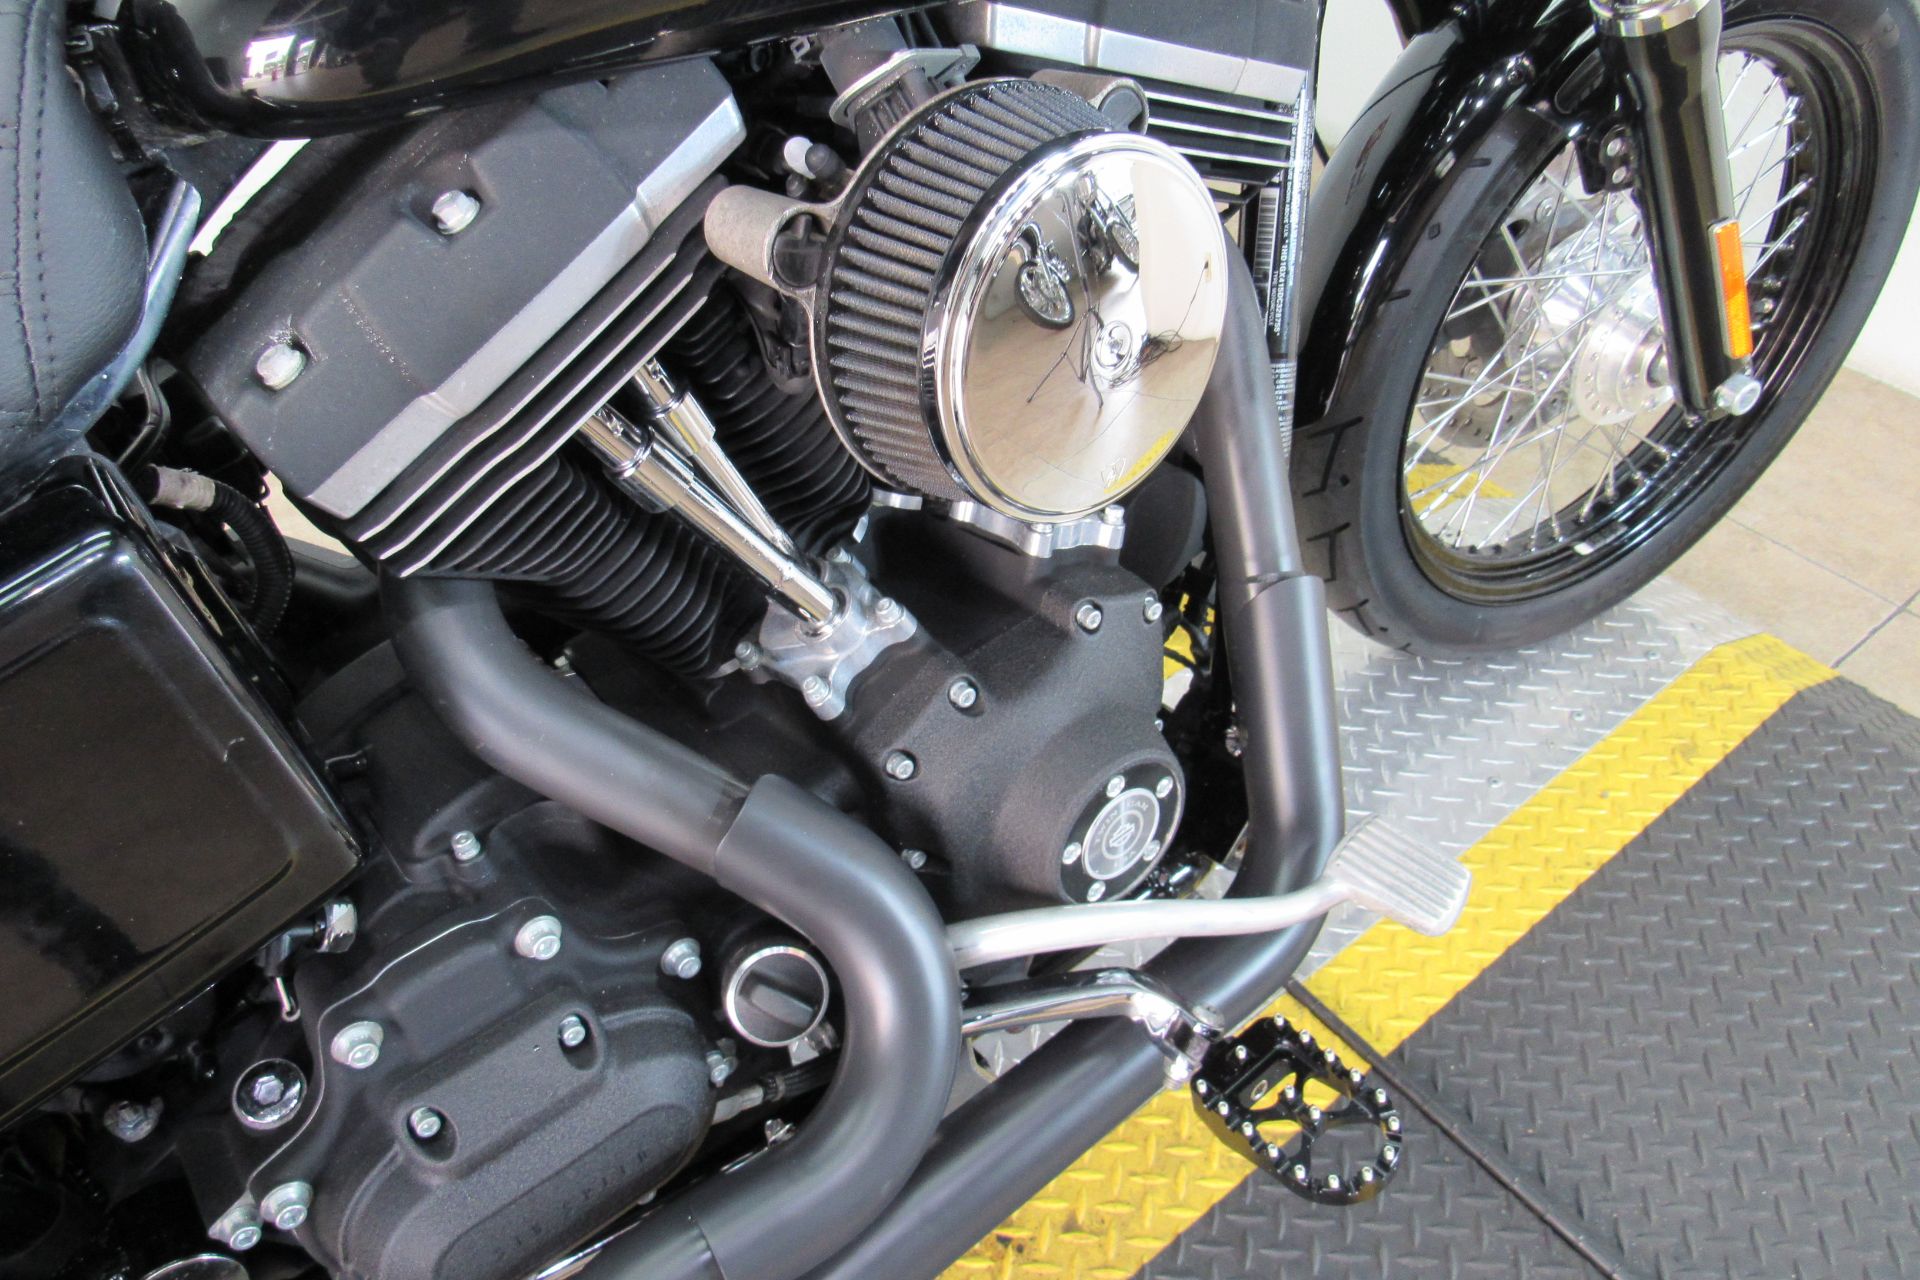 2013 Harley-Davidson Dyna® Street Bob® in Temecula, California - Photo 15